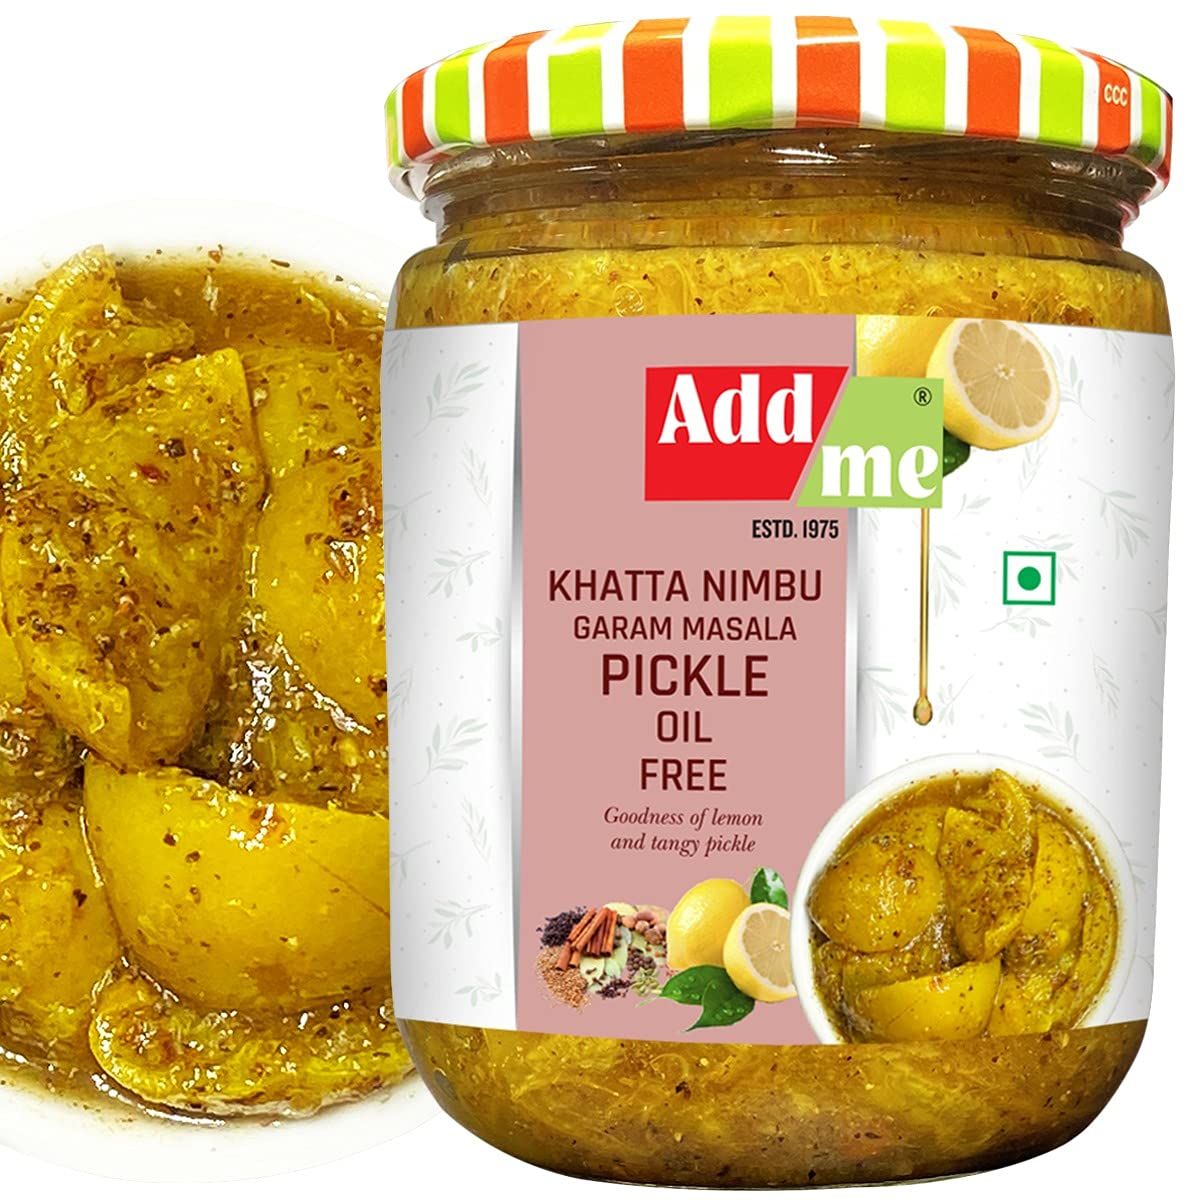 Add Me Khatta Nimbu Pickle Image